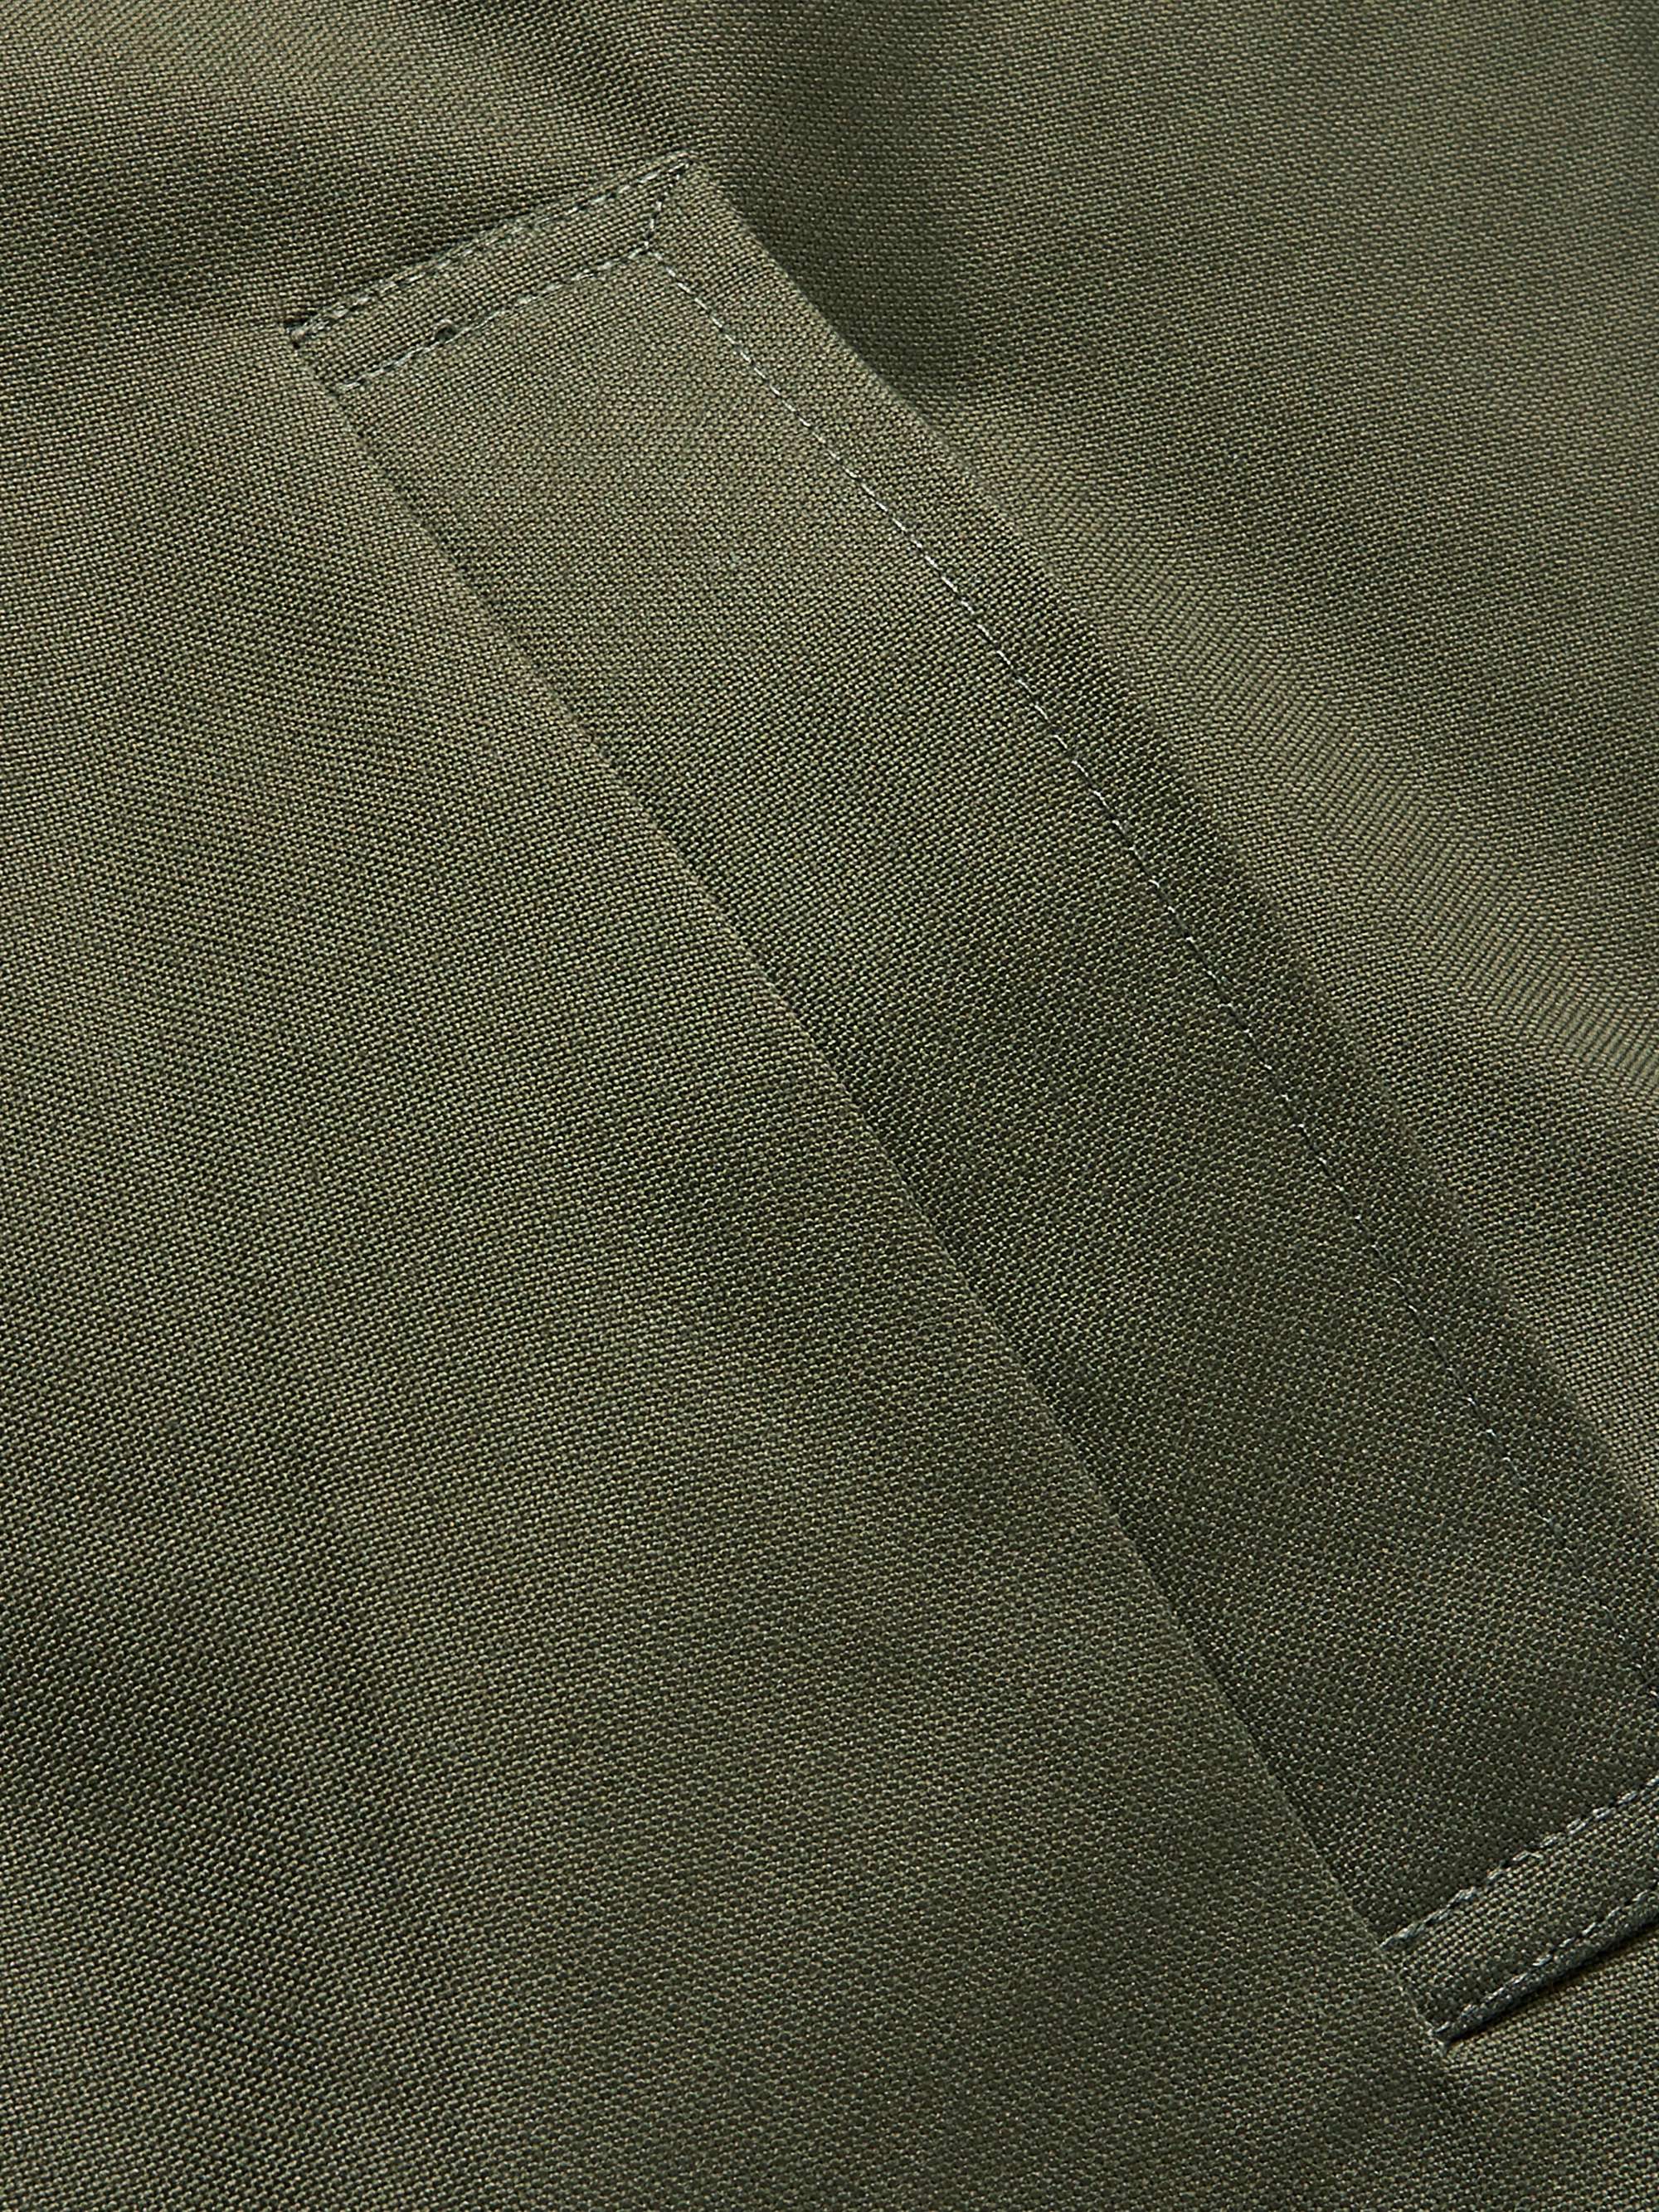 FRAME Cotton-Canvas Jacket